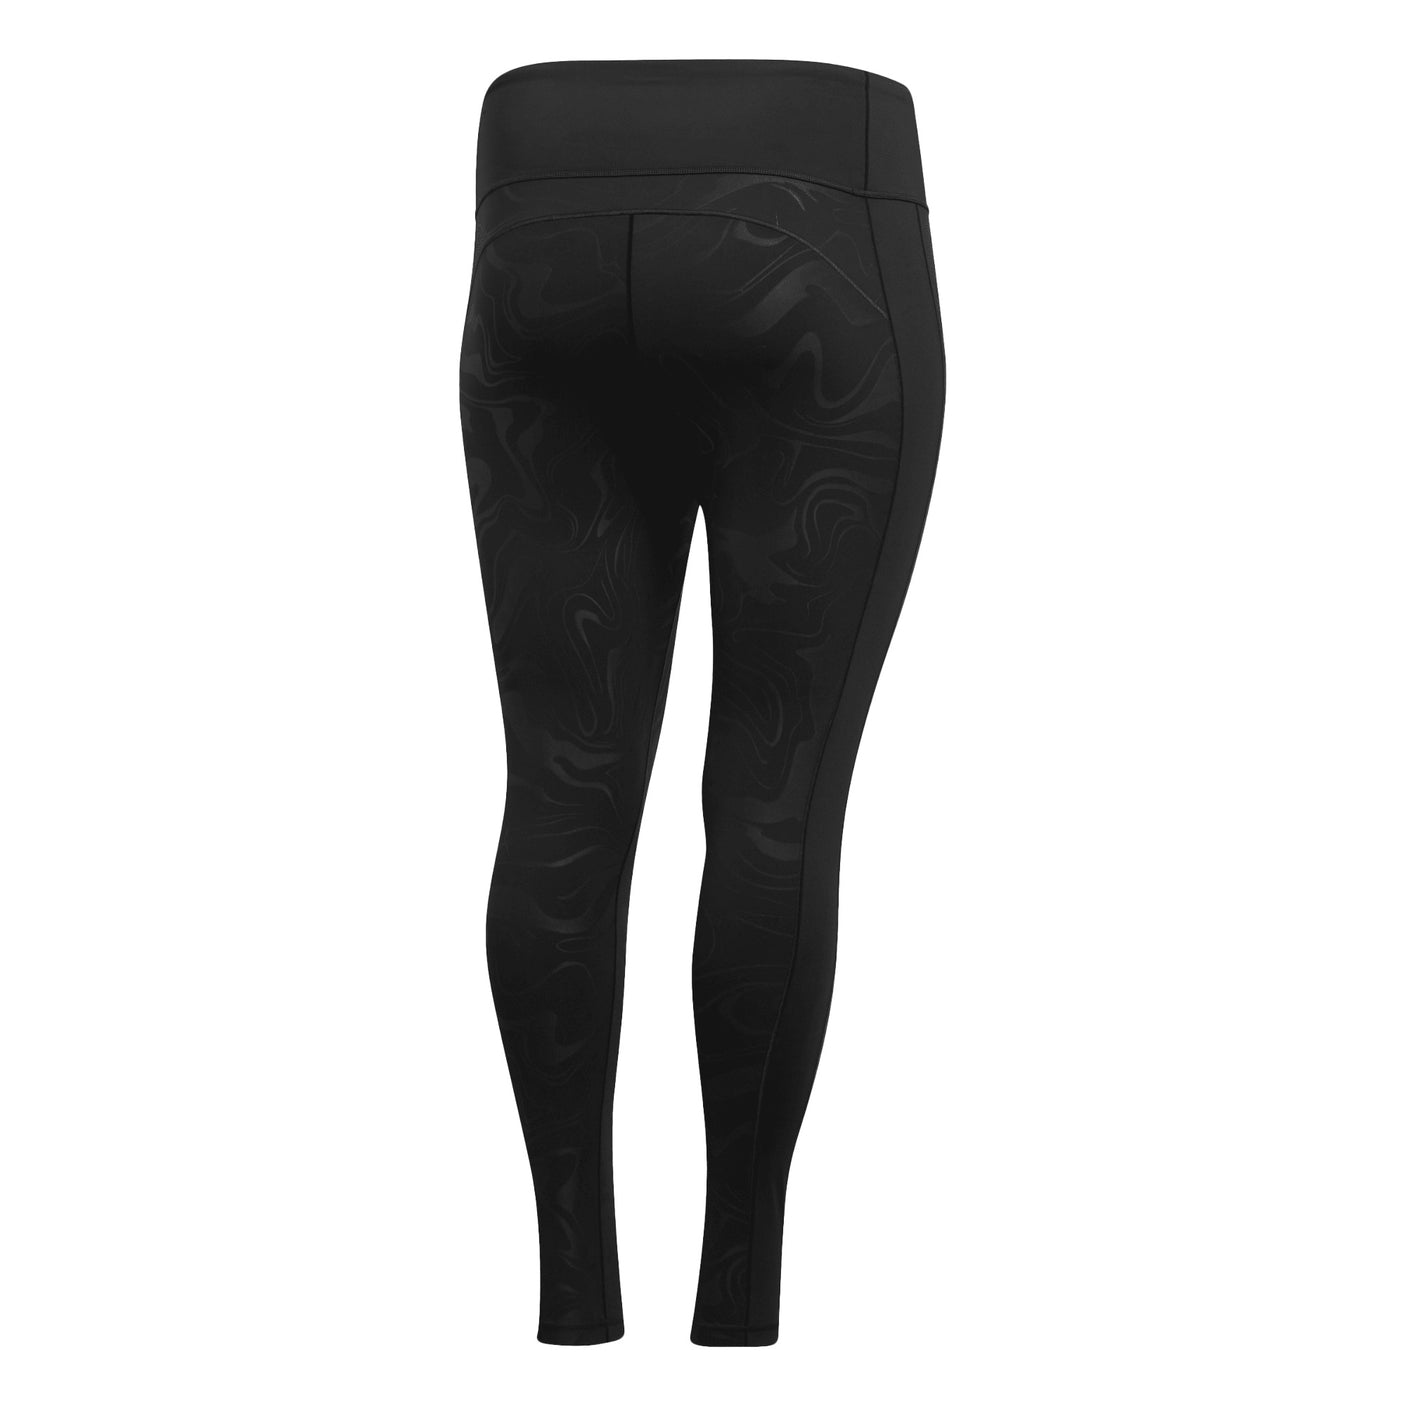 OM women's black leggings Olympique de Marseille Official Store